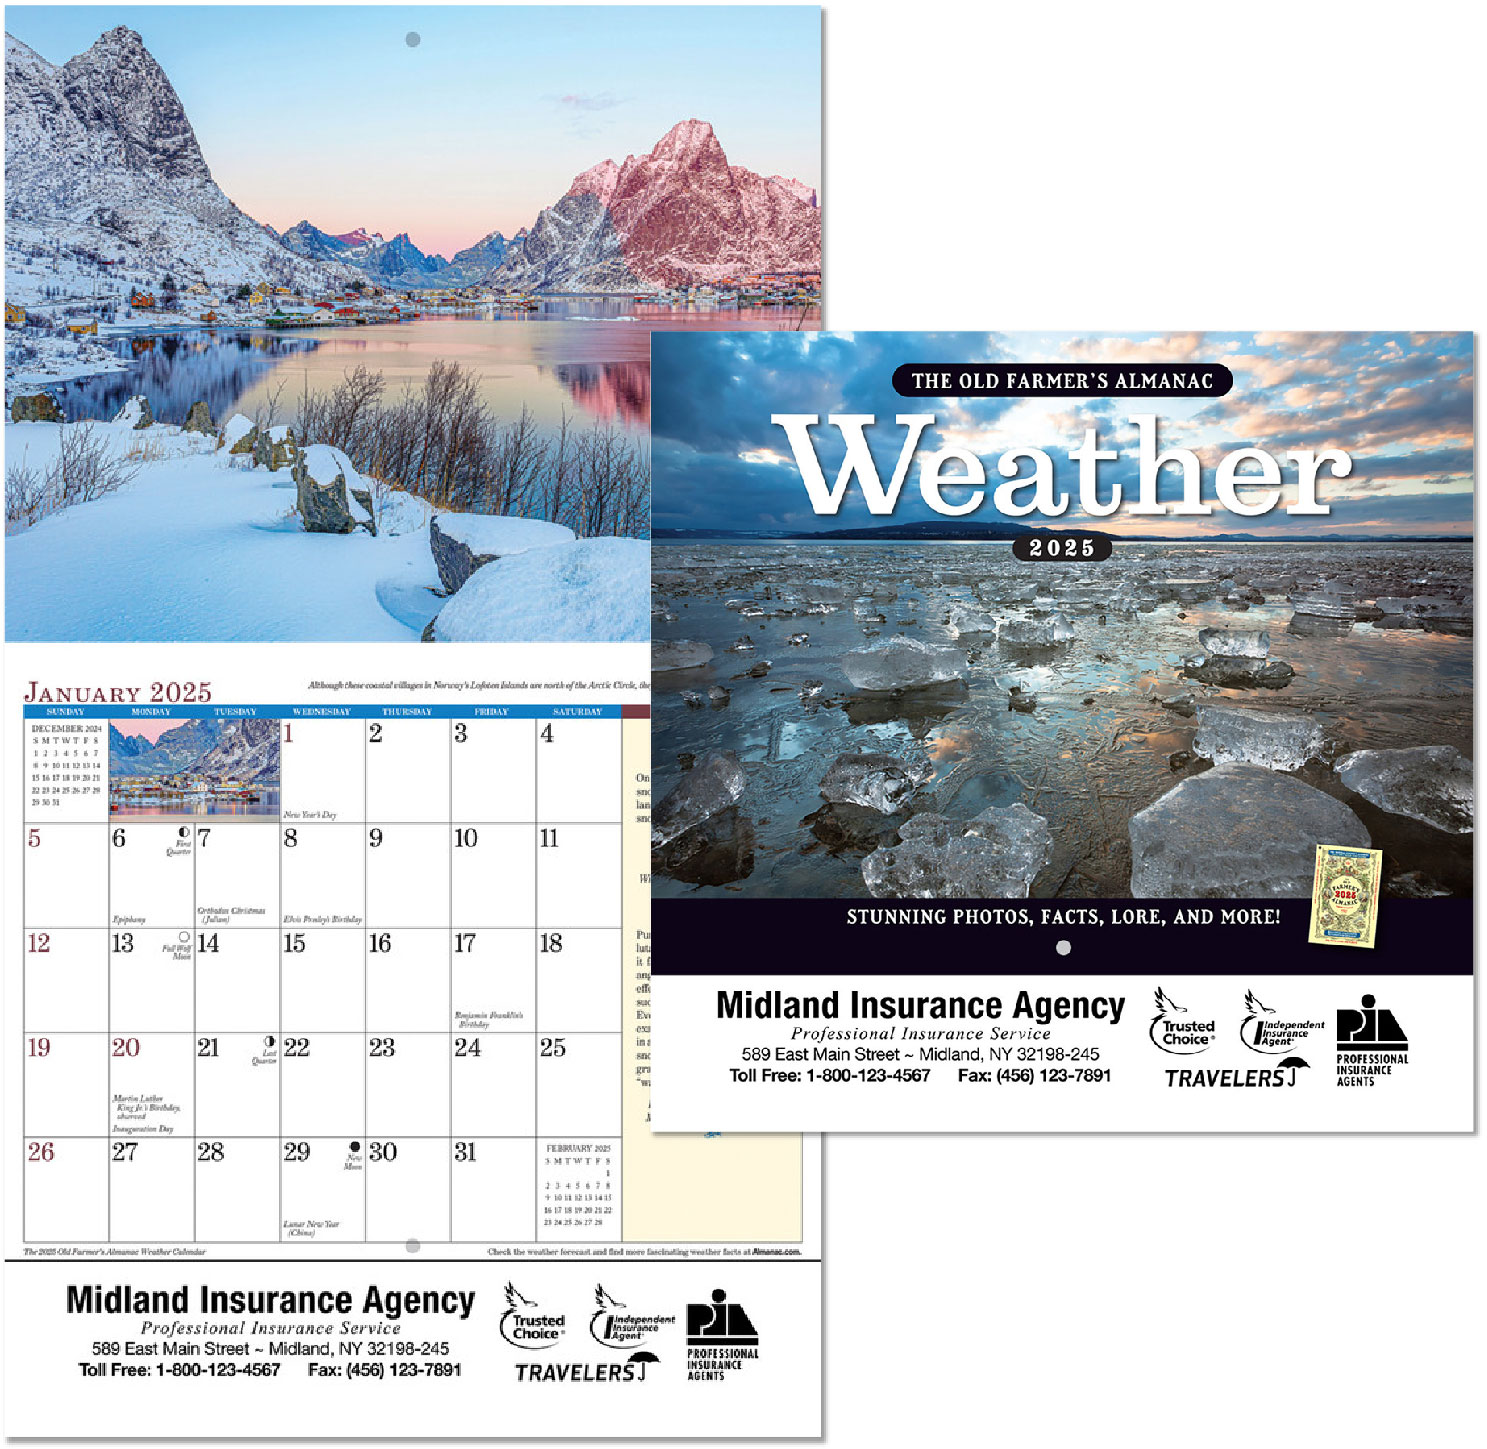 Custom Imprinted Calendar - The Old Farmer's Almanac Weather Watcher's #OF56WE1